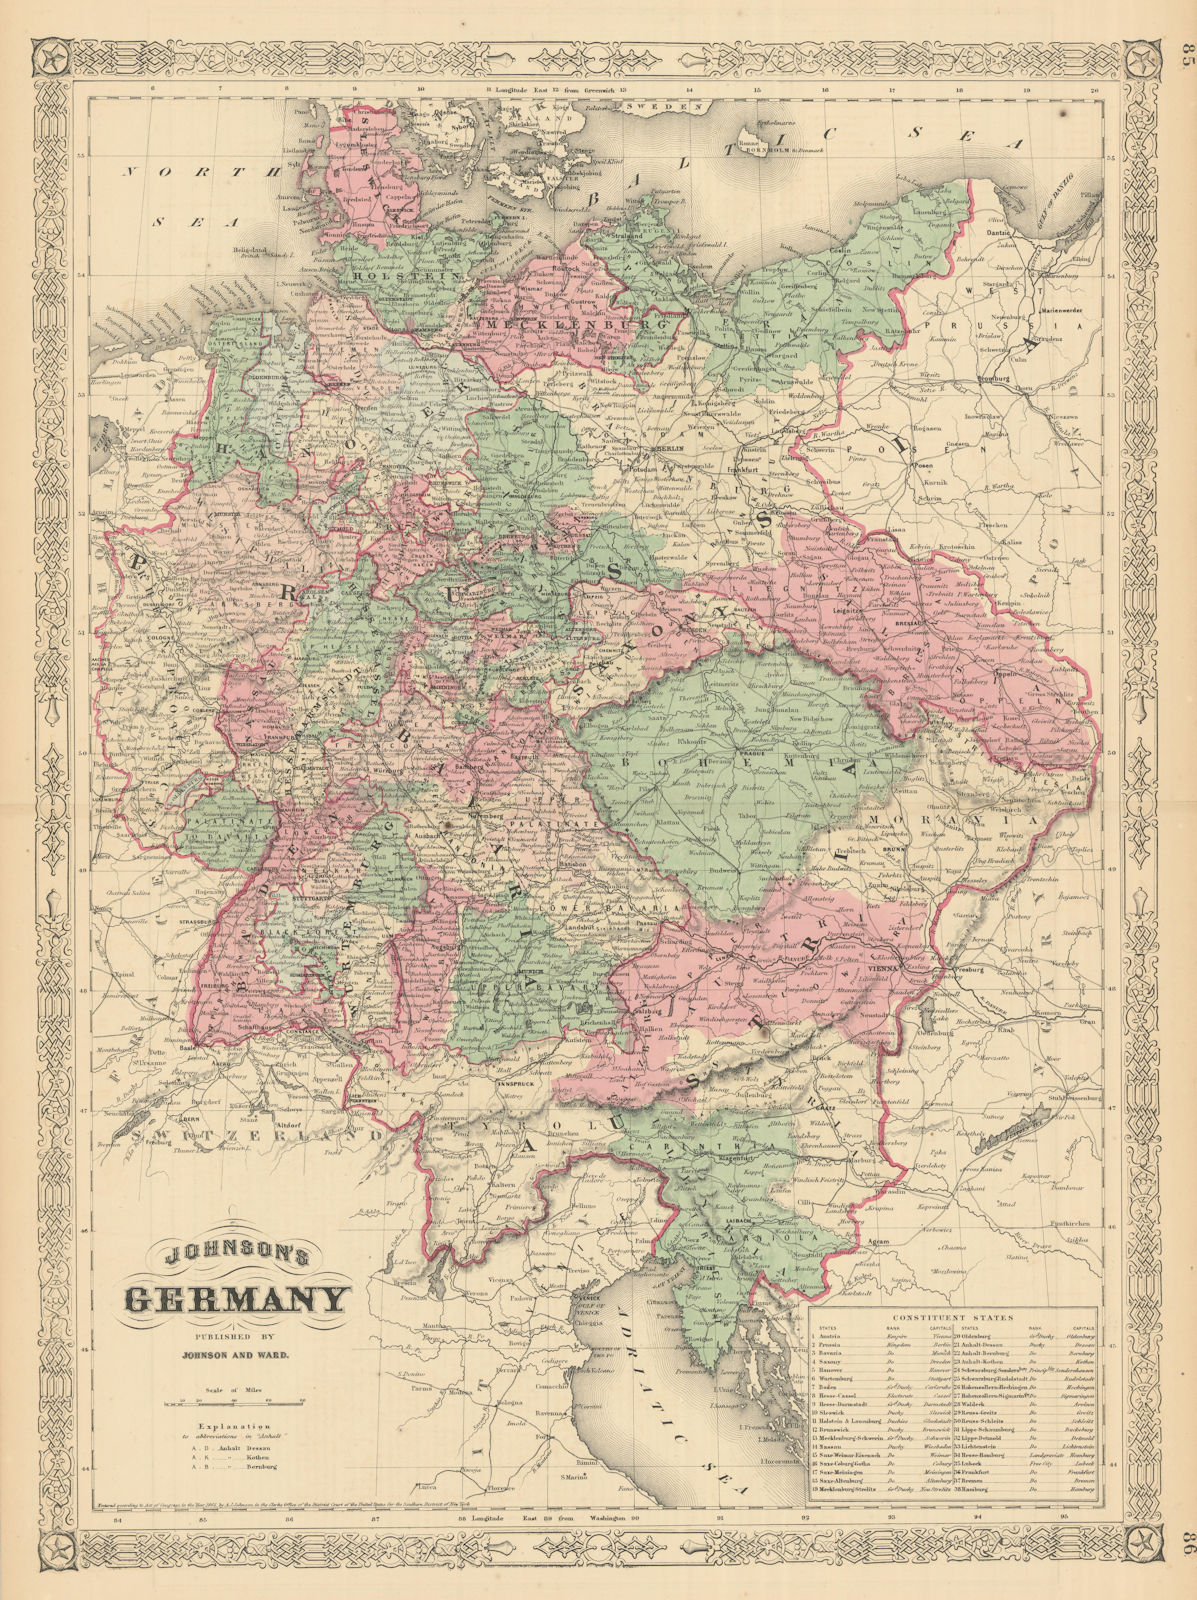 Associate Product Johnson's Germany. Prussia Austria Bohemia Moravia Czech Republic Tyrol 1866 map